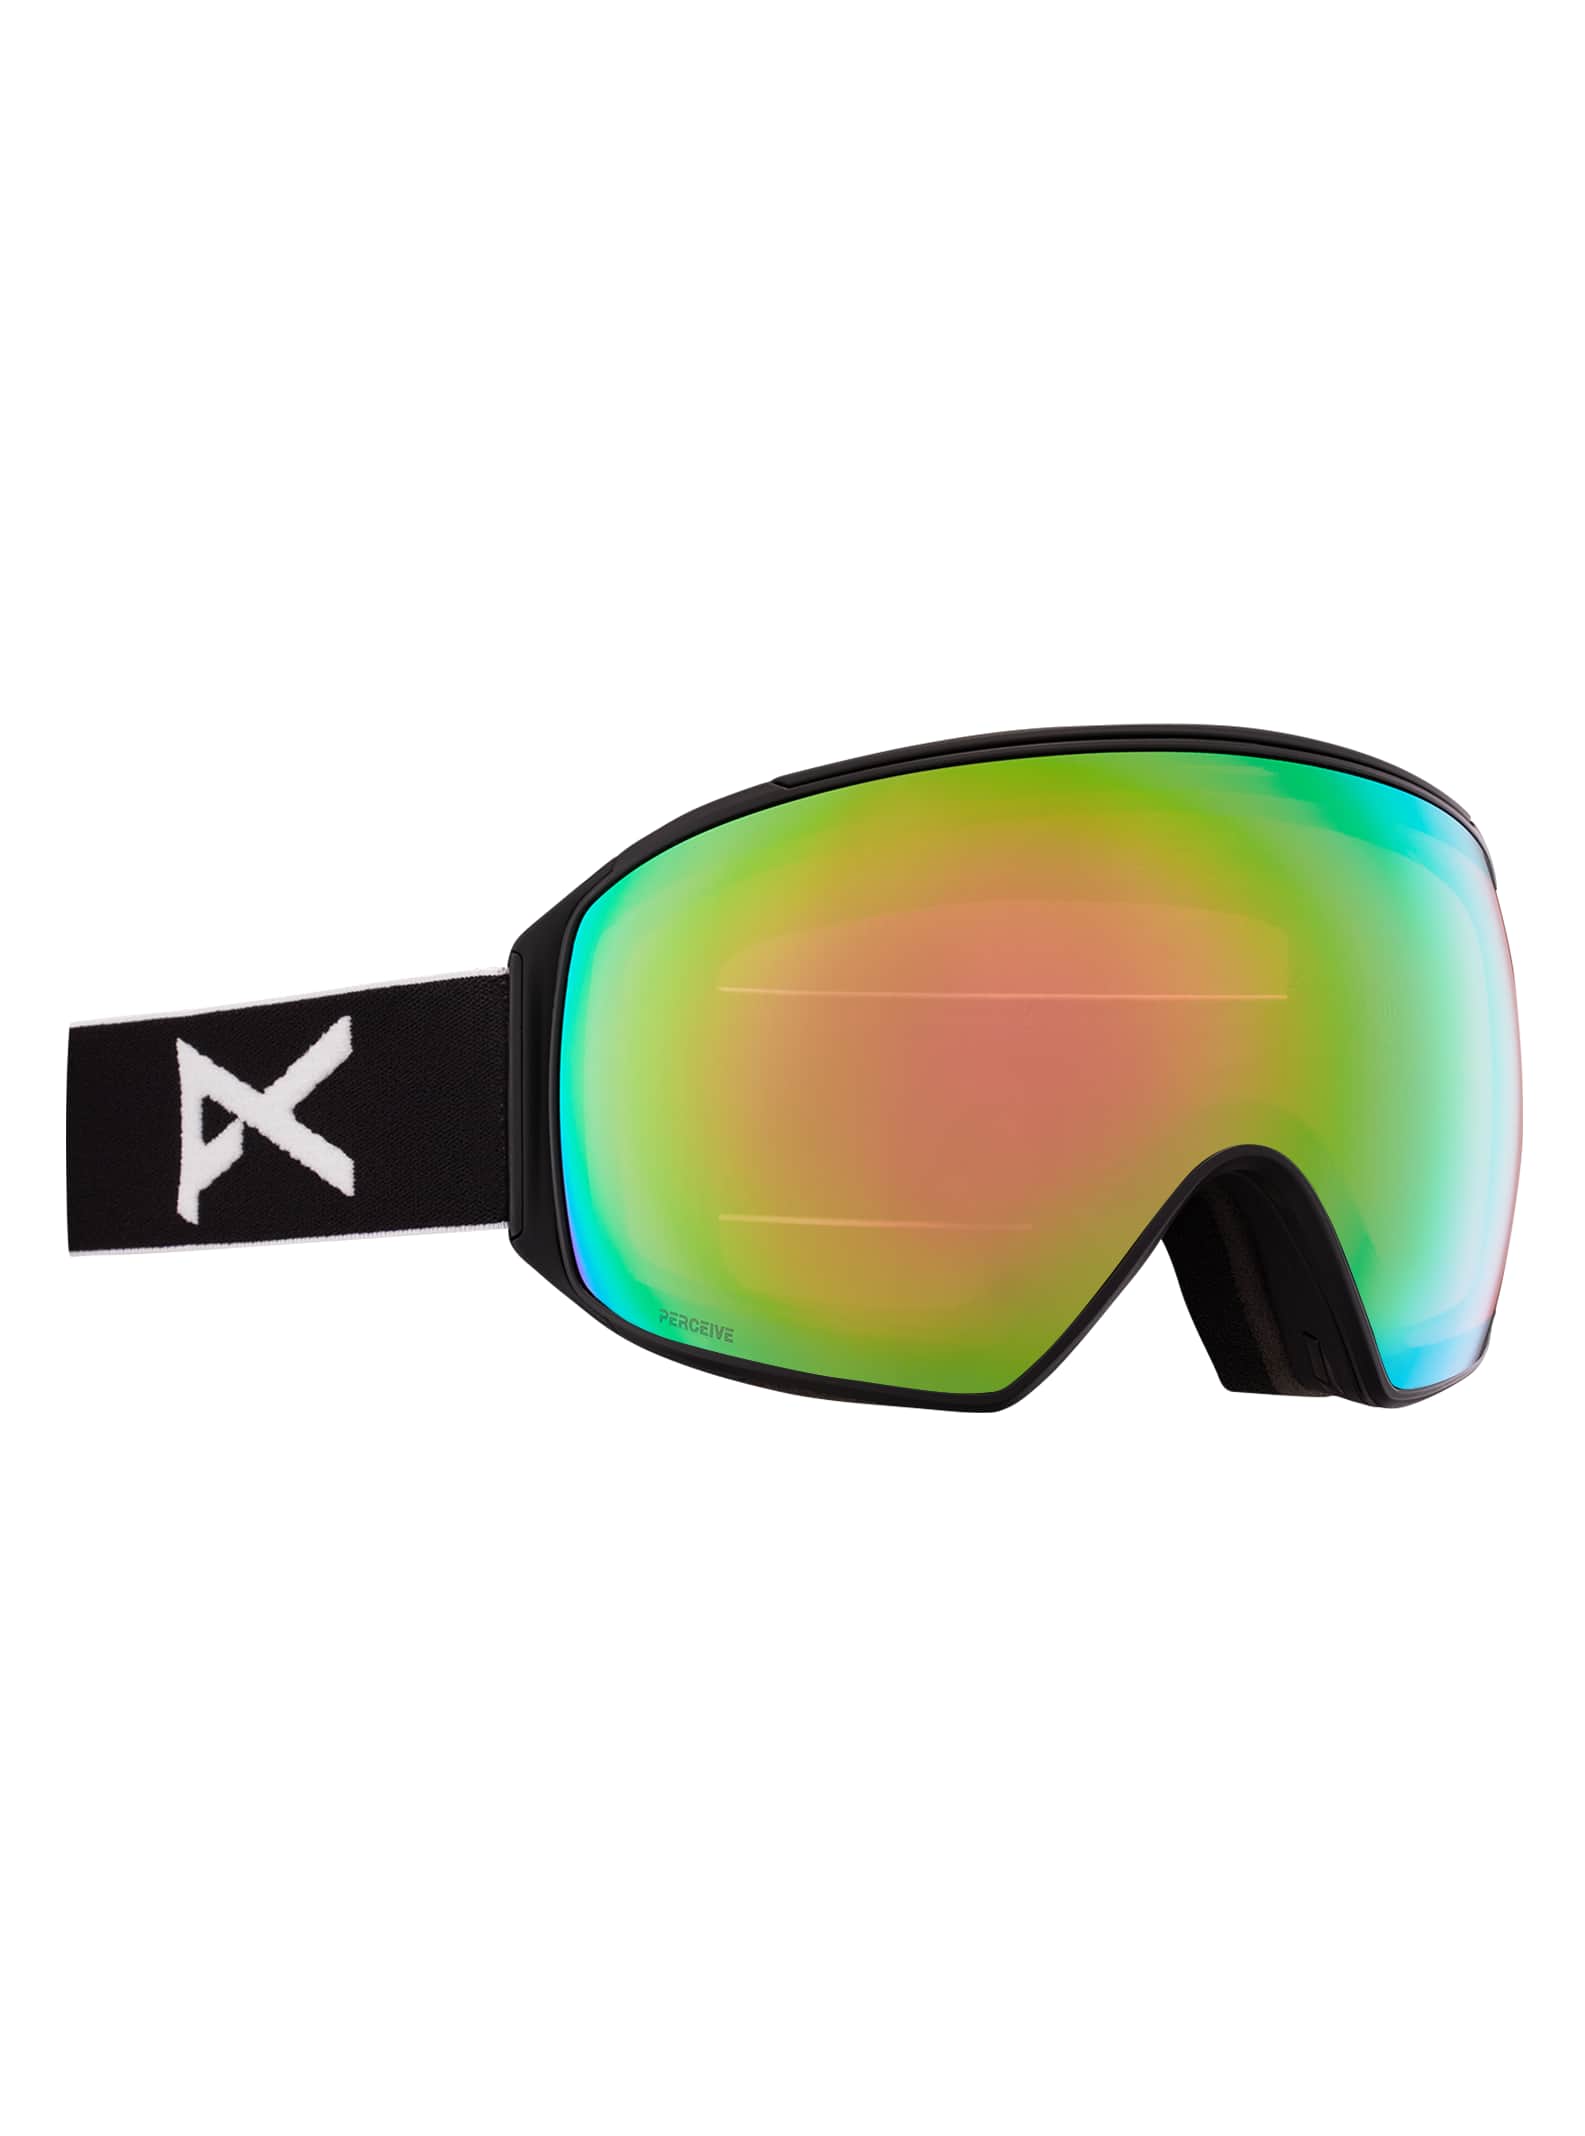 Men's Goggles & Lenses | Ski & Snowboard Goggles for | Optics US